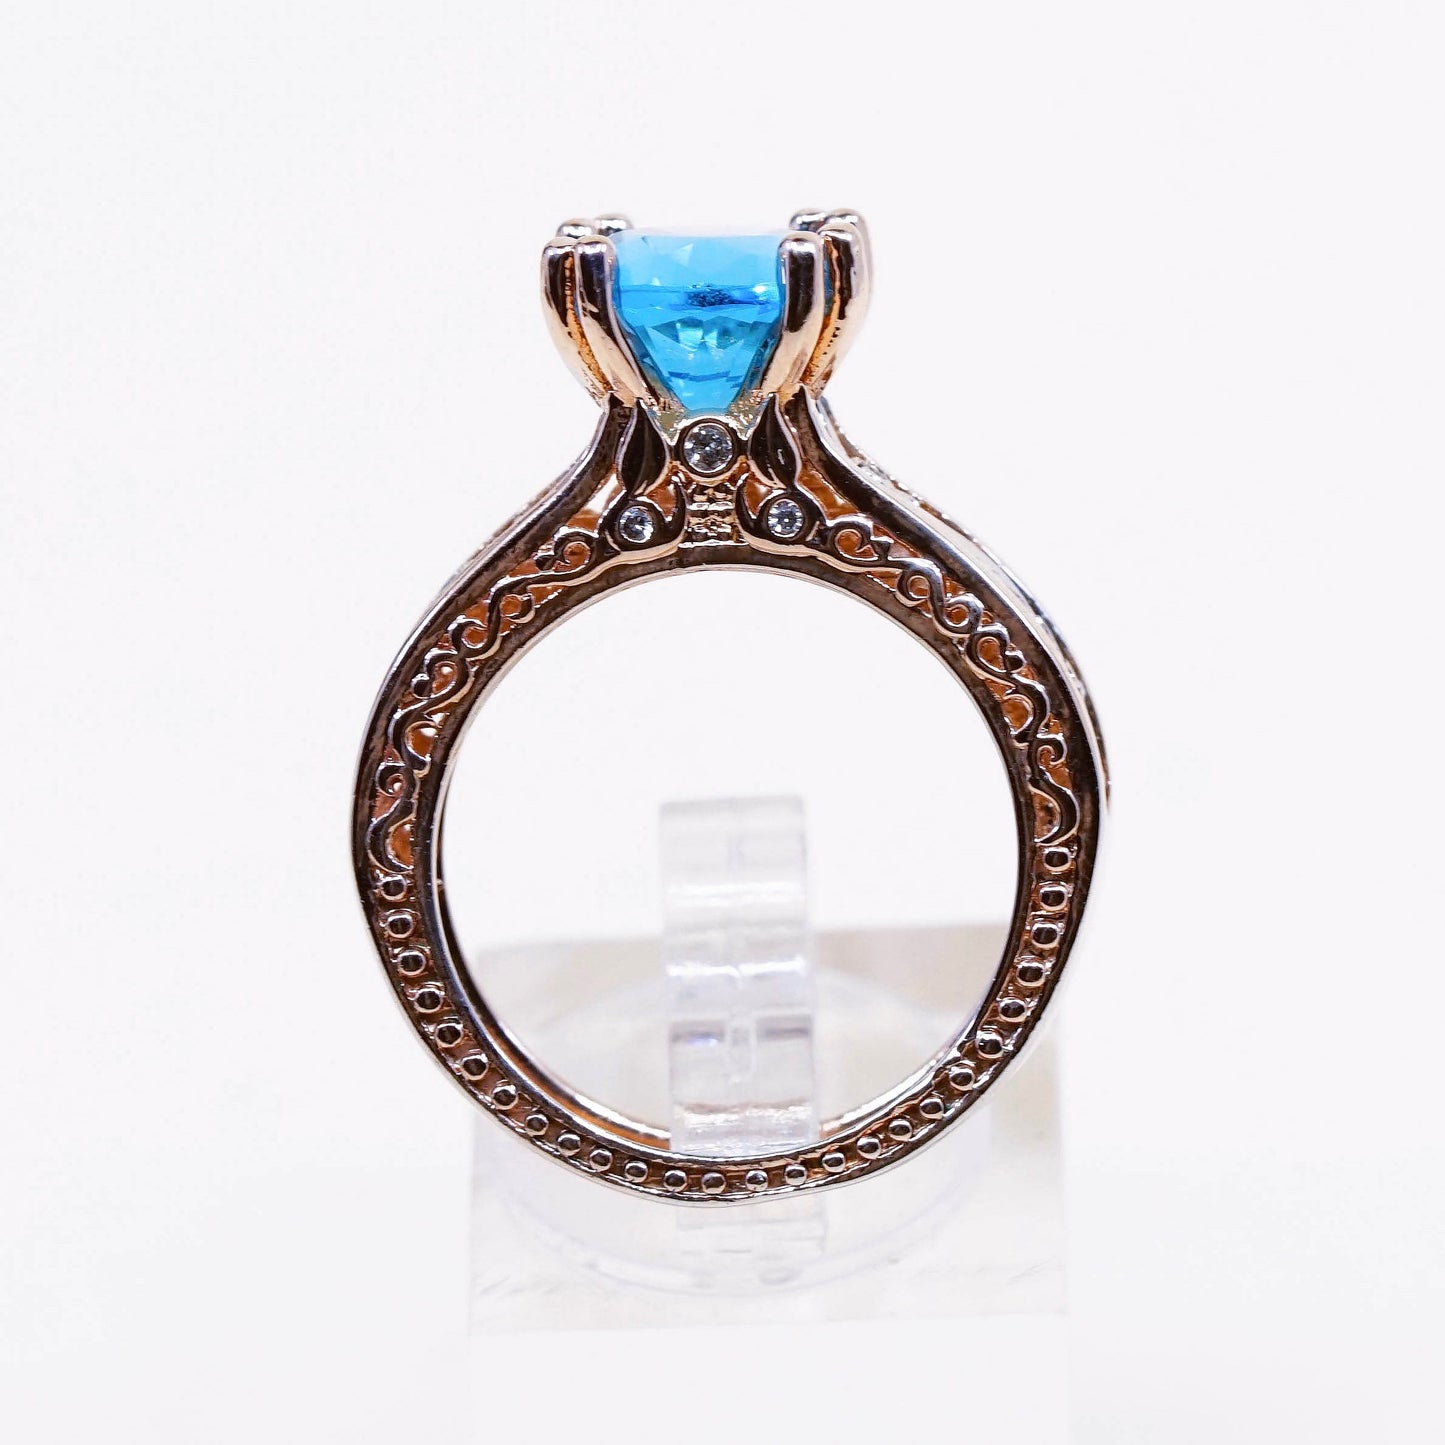 sz 8, Vermeil rose gold over Sterling silver ring, 925 w/ blue topaz N diamond